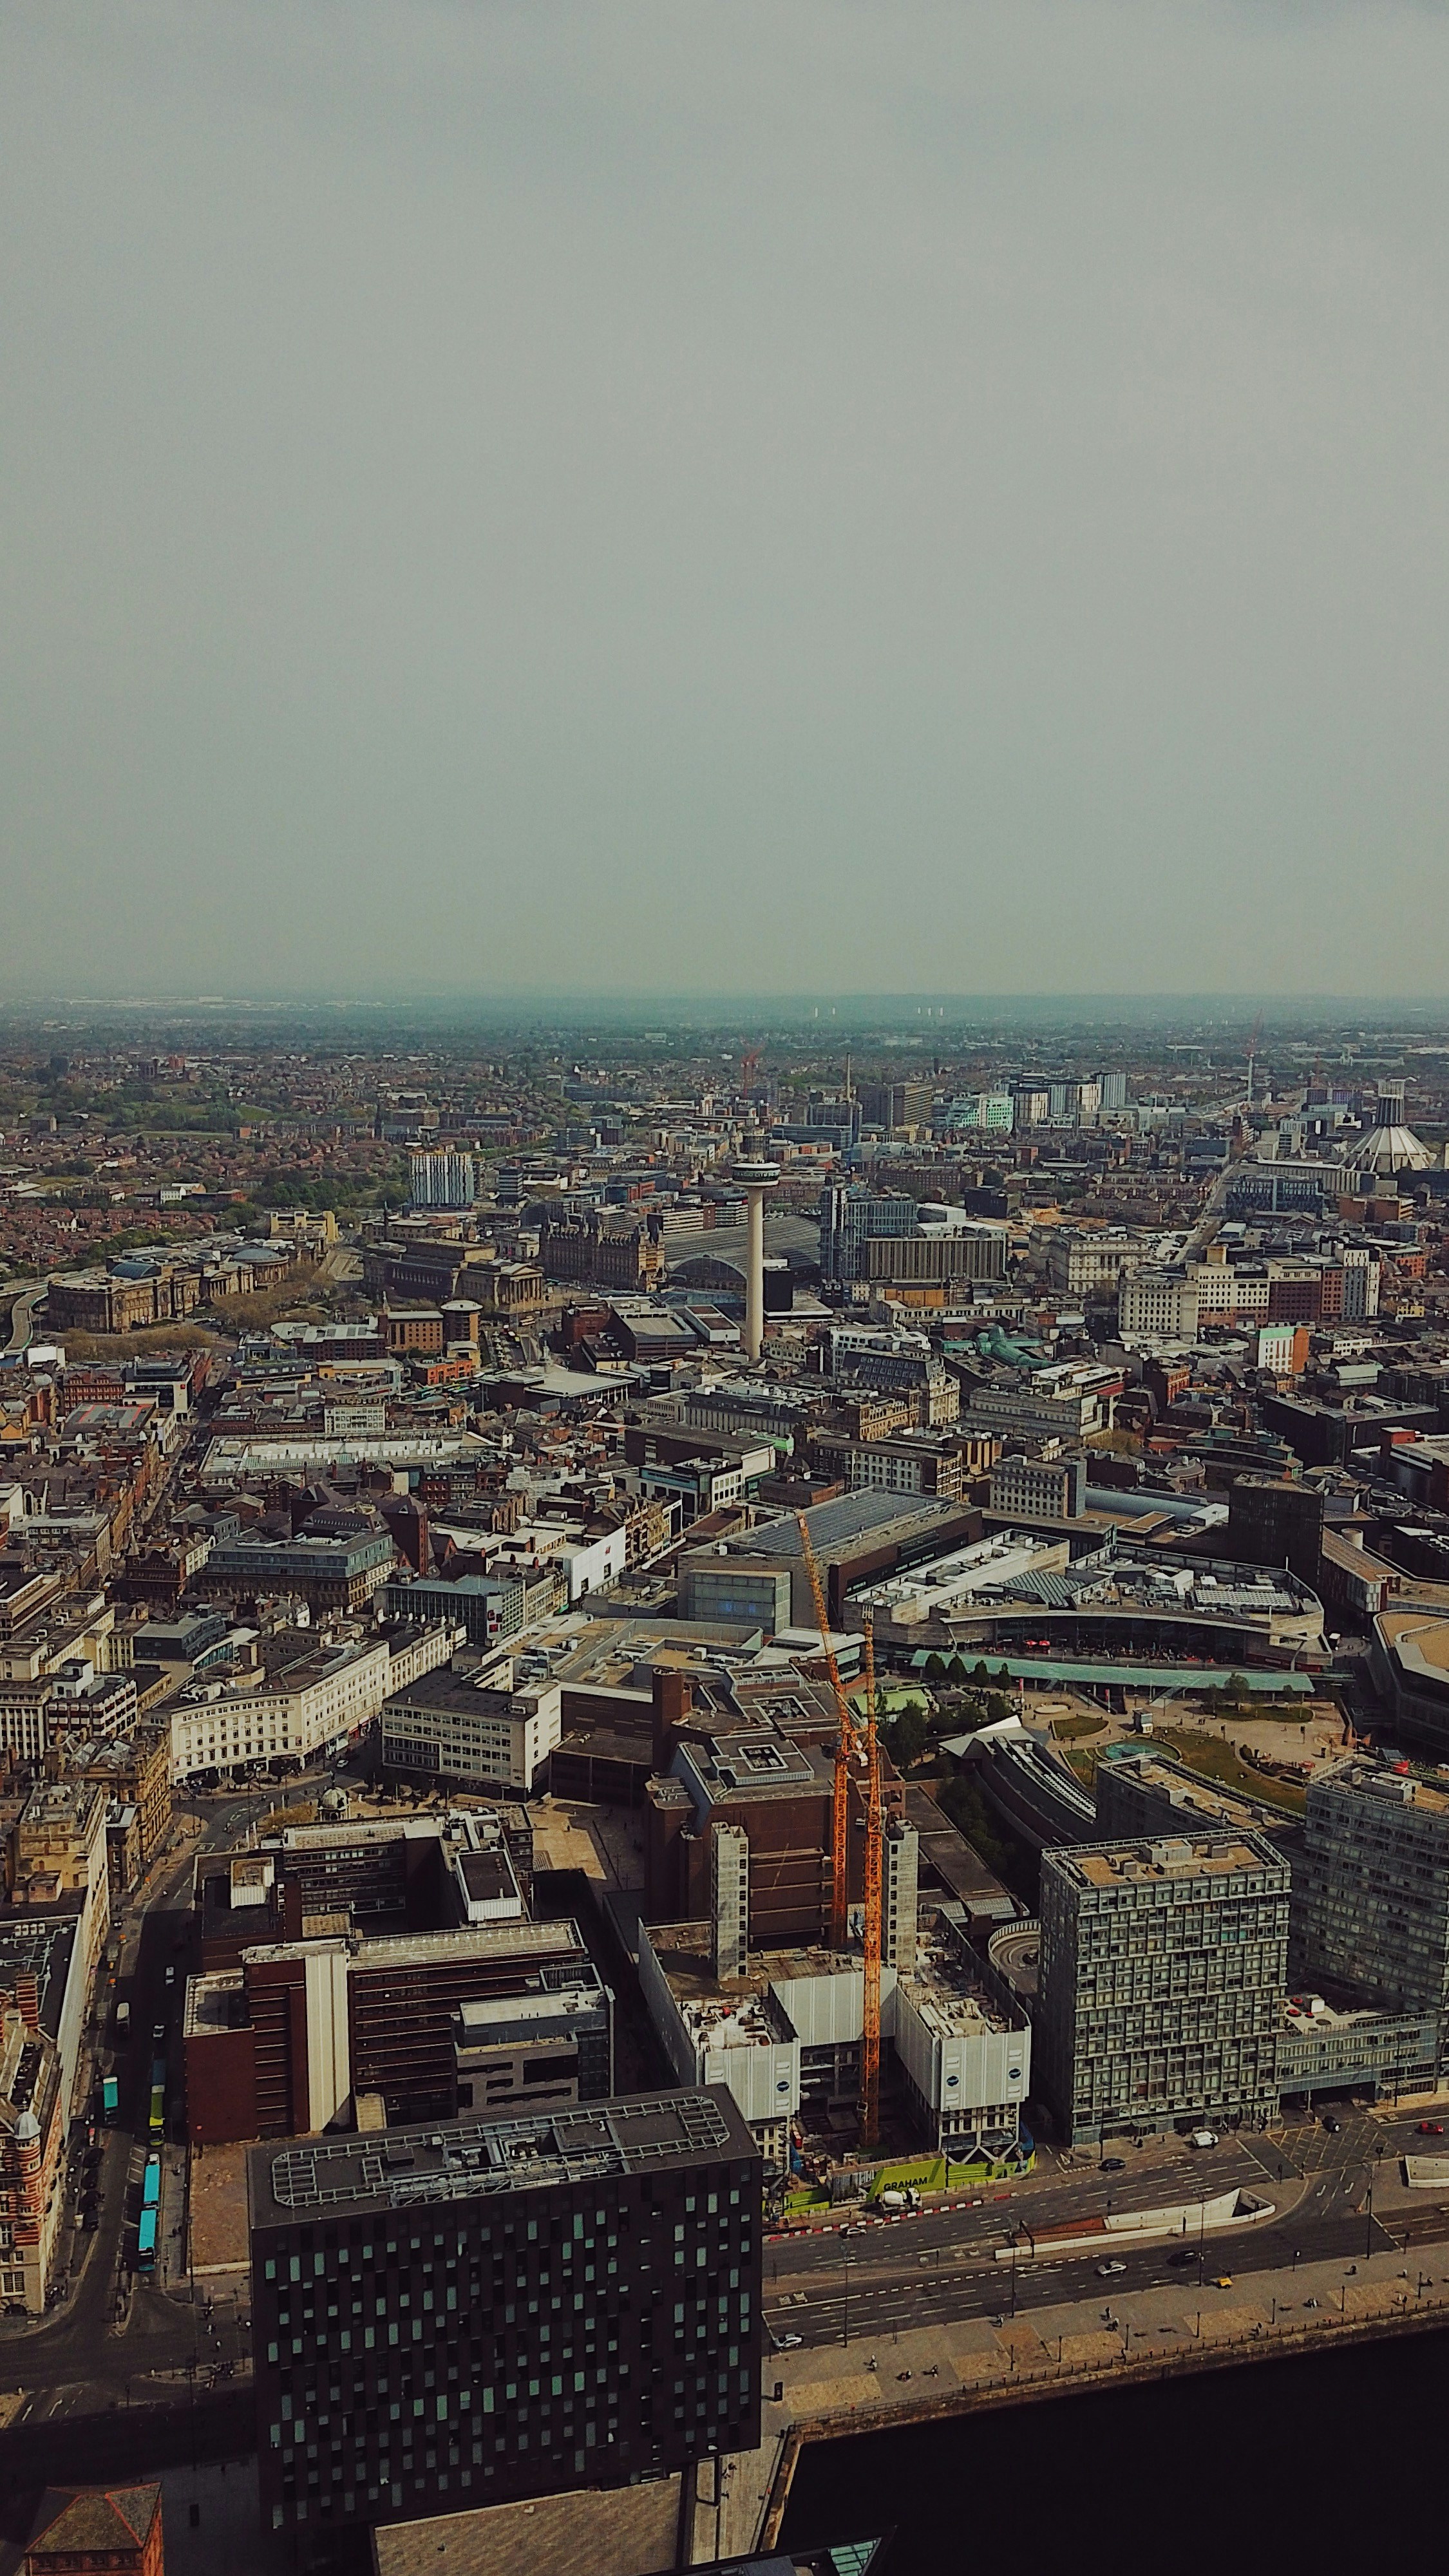 Liverpool drone photo, looking toward Radio City Tower